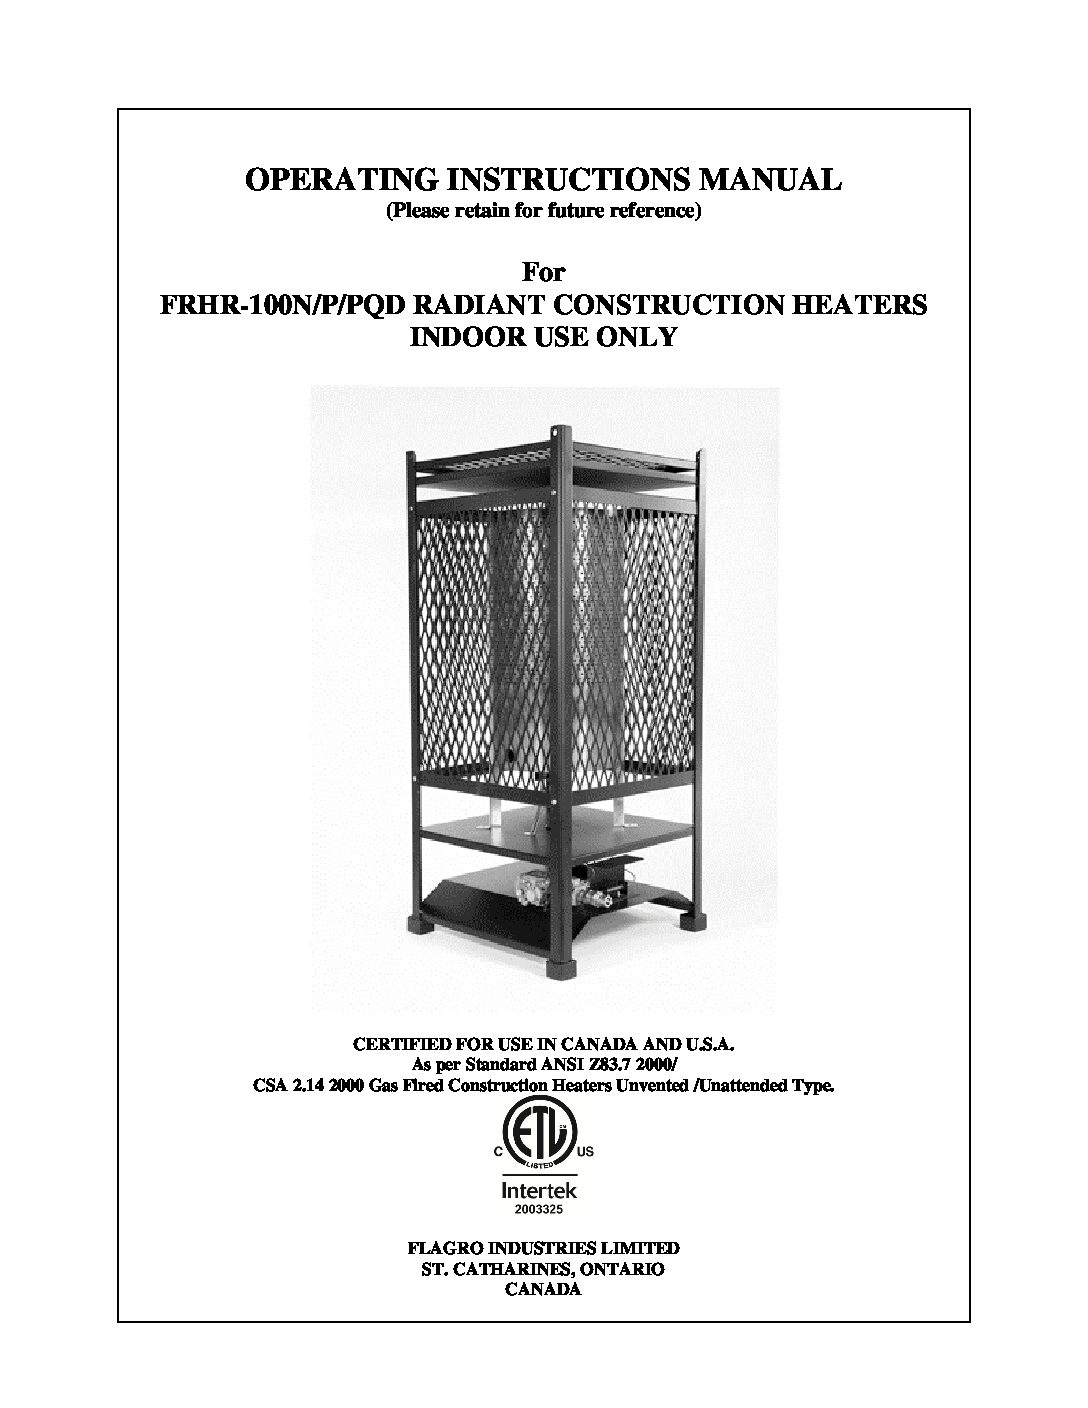 Flagro FRHR 100 Radiant Construction Heater Operating Manual